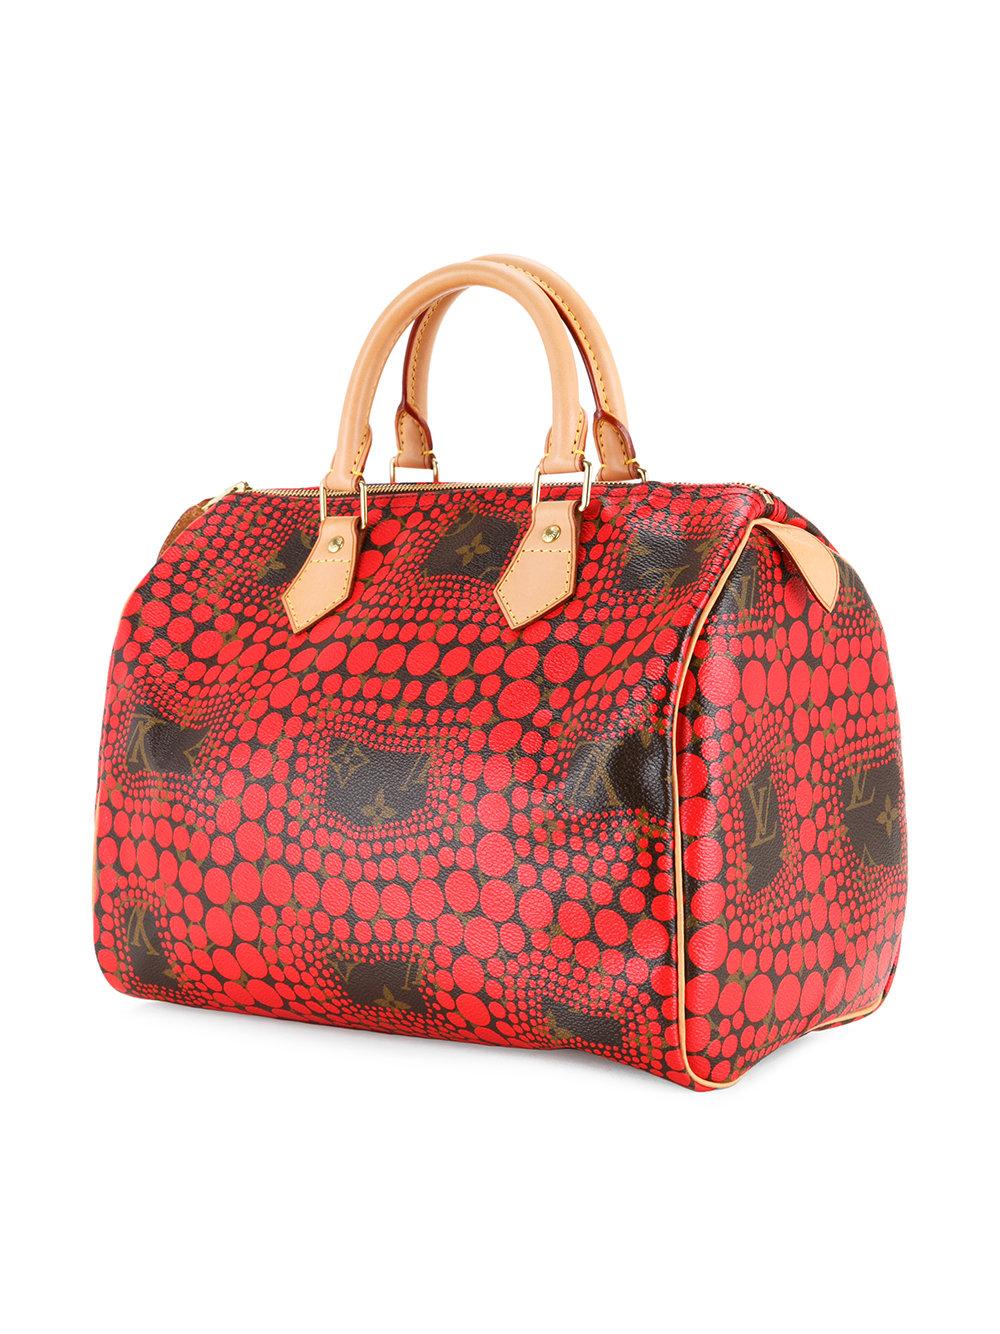 Lyst - Louis Vuitton Yayoi Kusama X Louis Vuitton Speedy Bag in Red